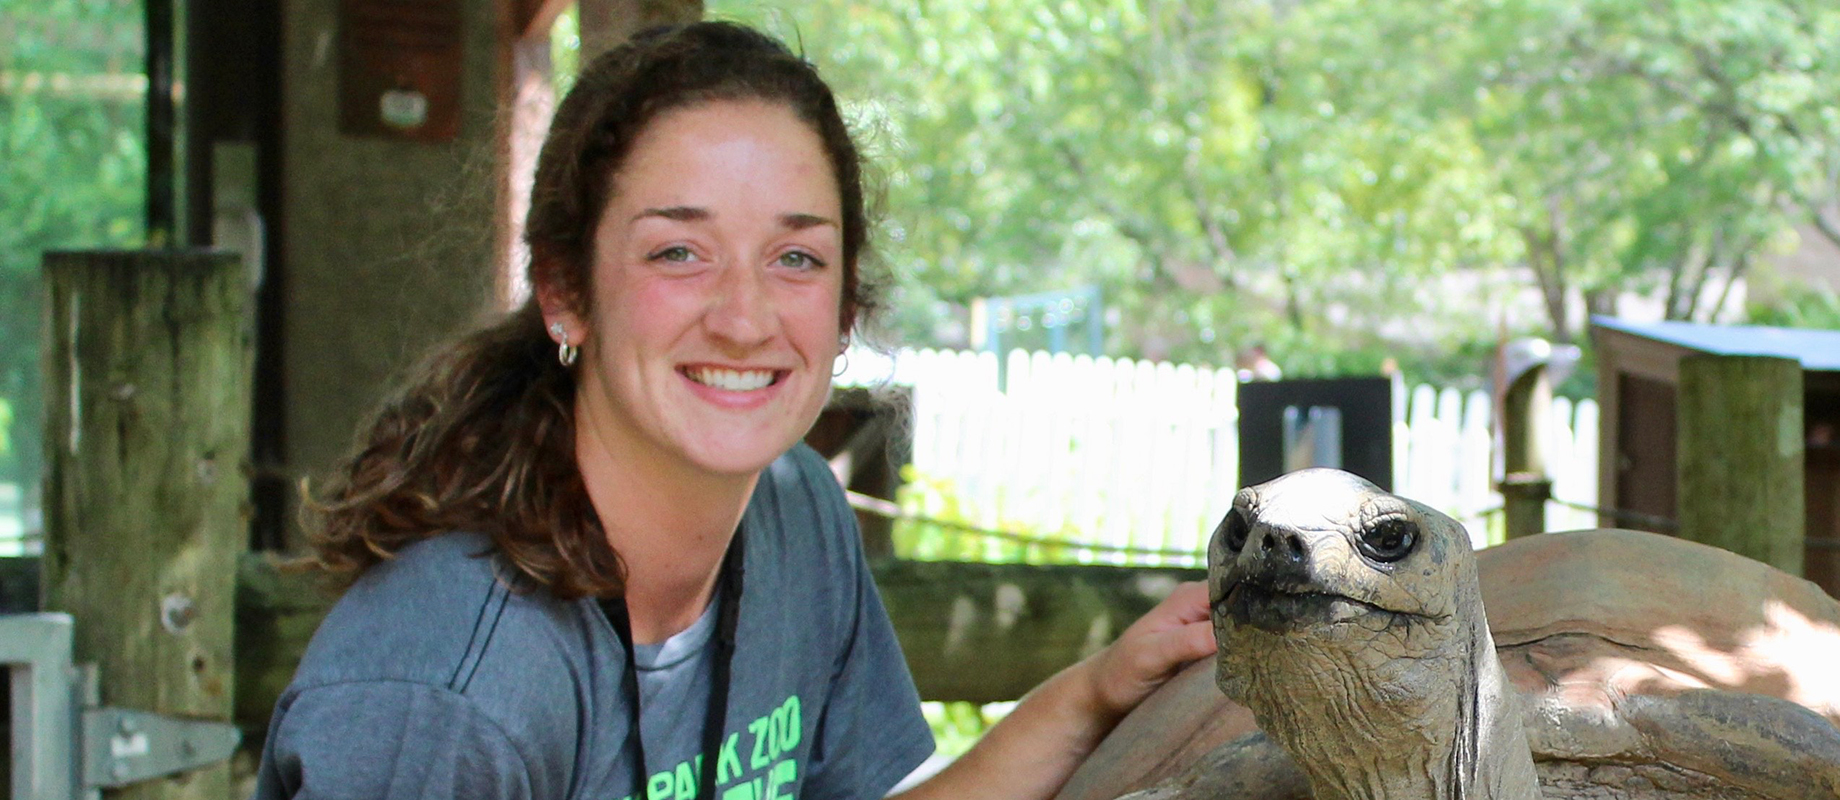 Simpson College graduate Emma Fleddermann with a tortoise at Blank Park Zoo.